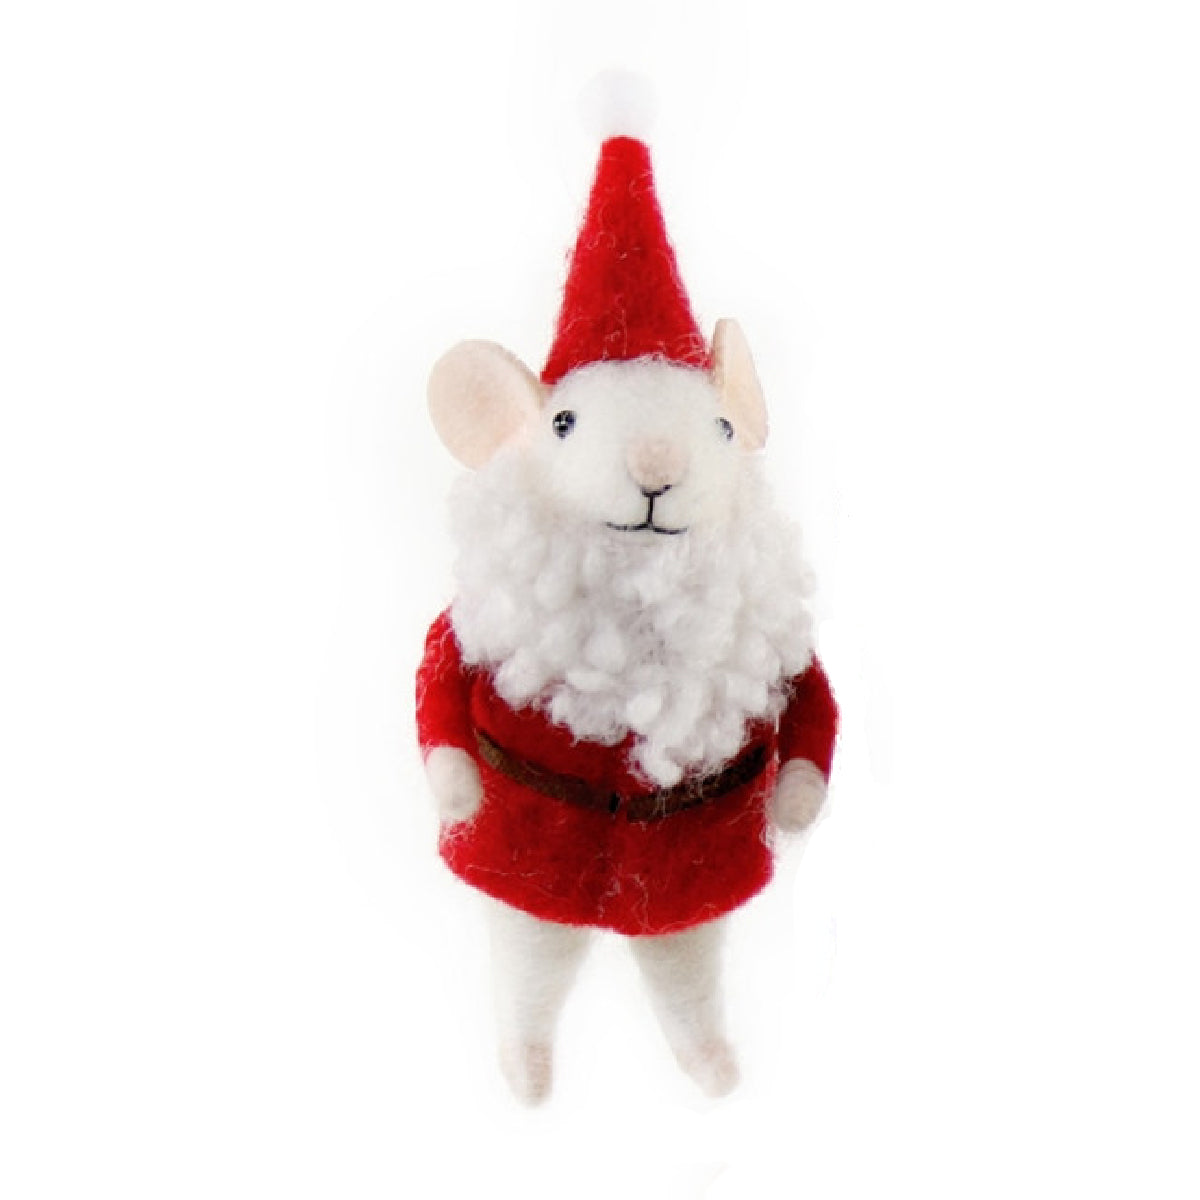 Felt Mr. Mouse Ornament, dressed as Santa